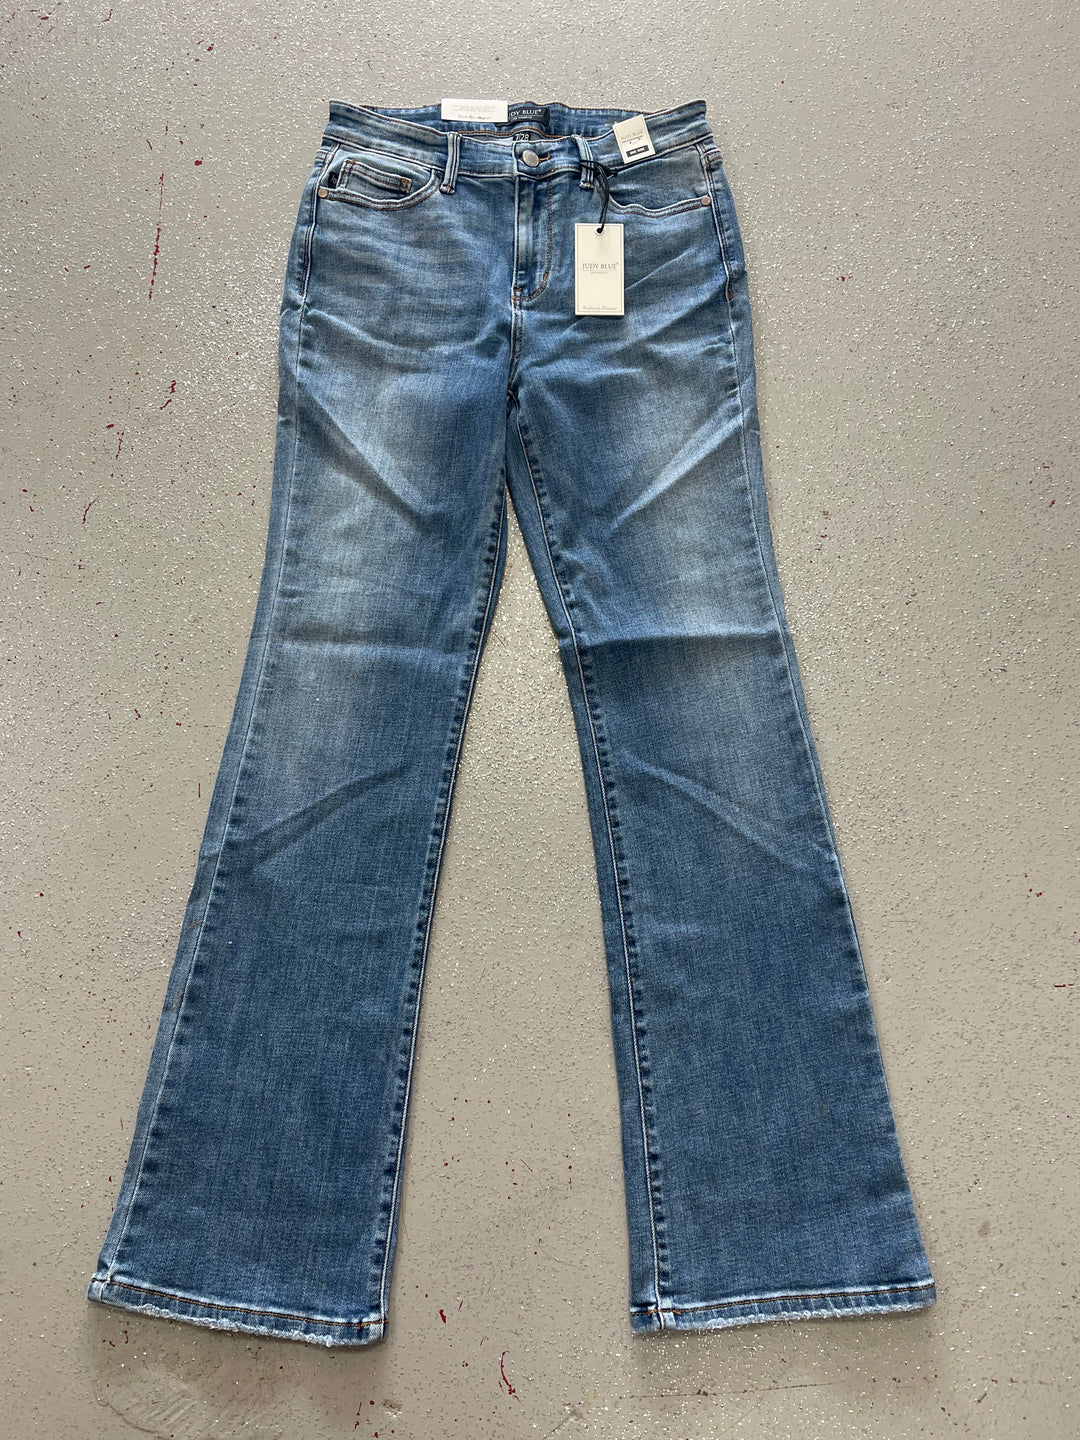 JB Mid Rise Vintage bootcut jeans